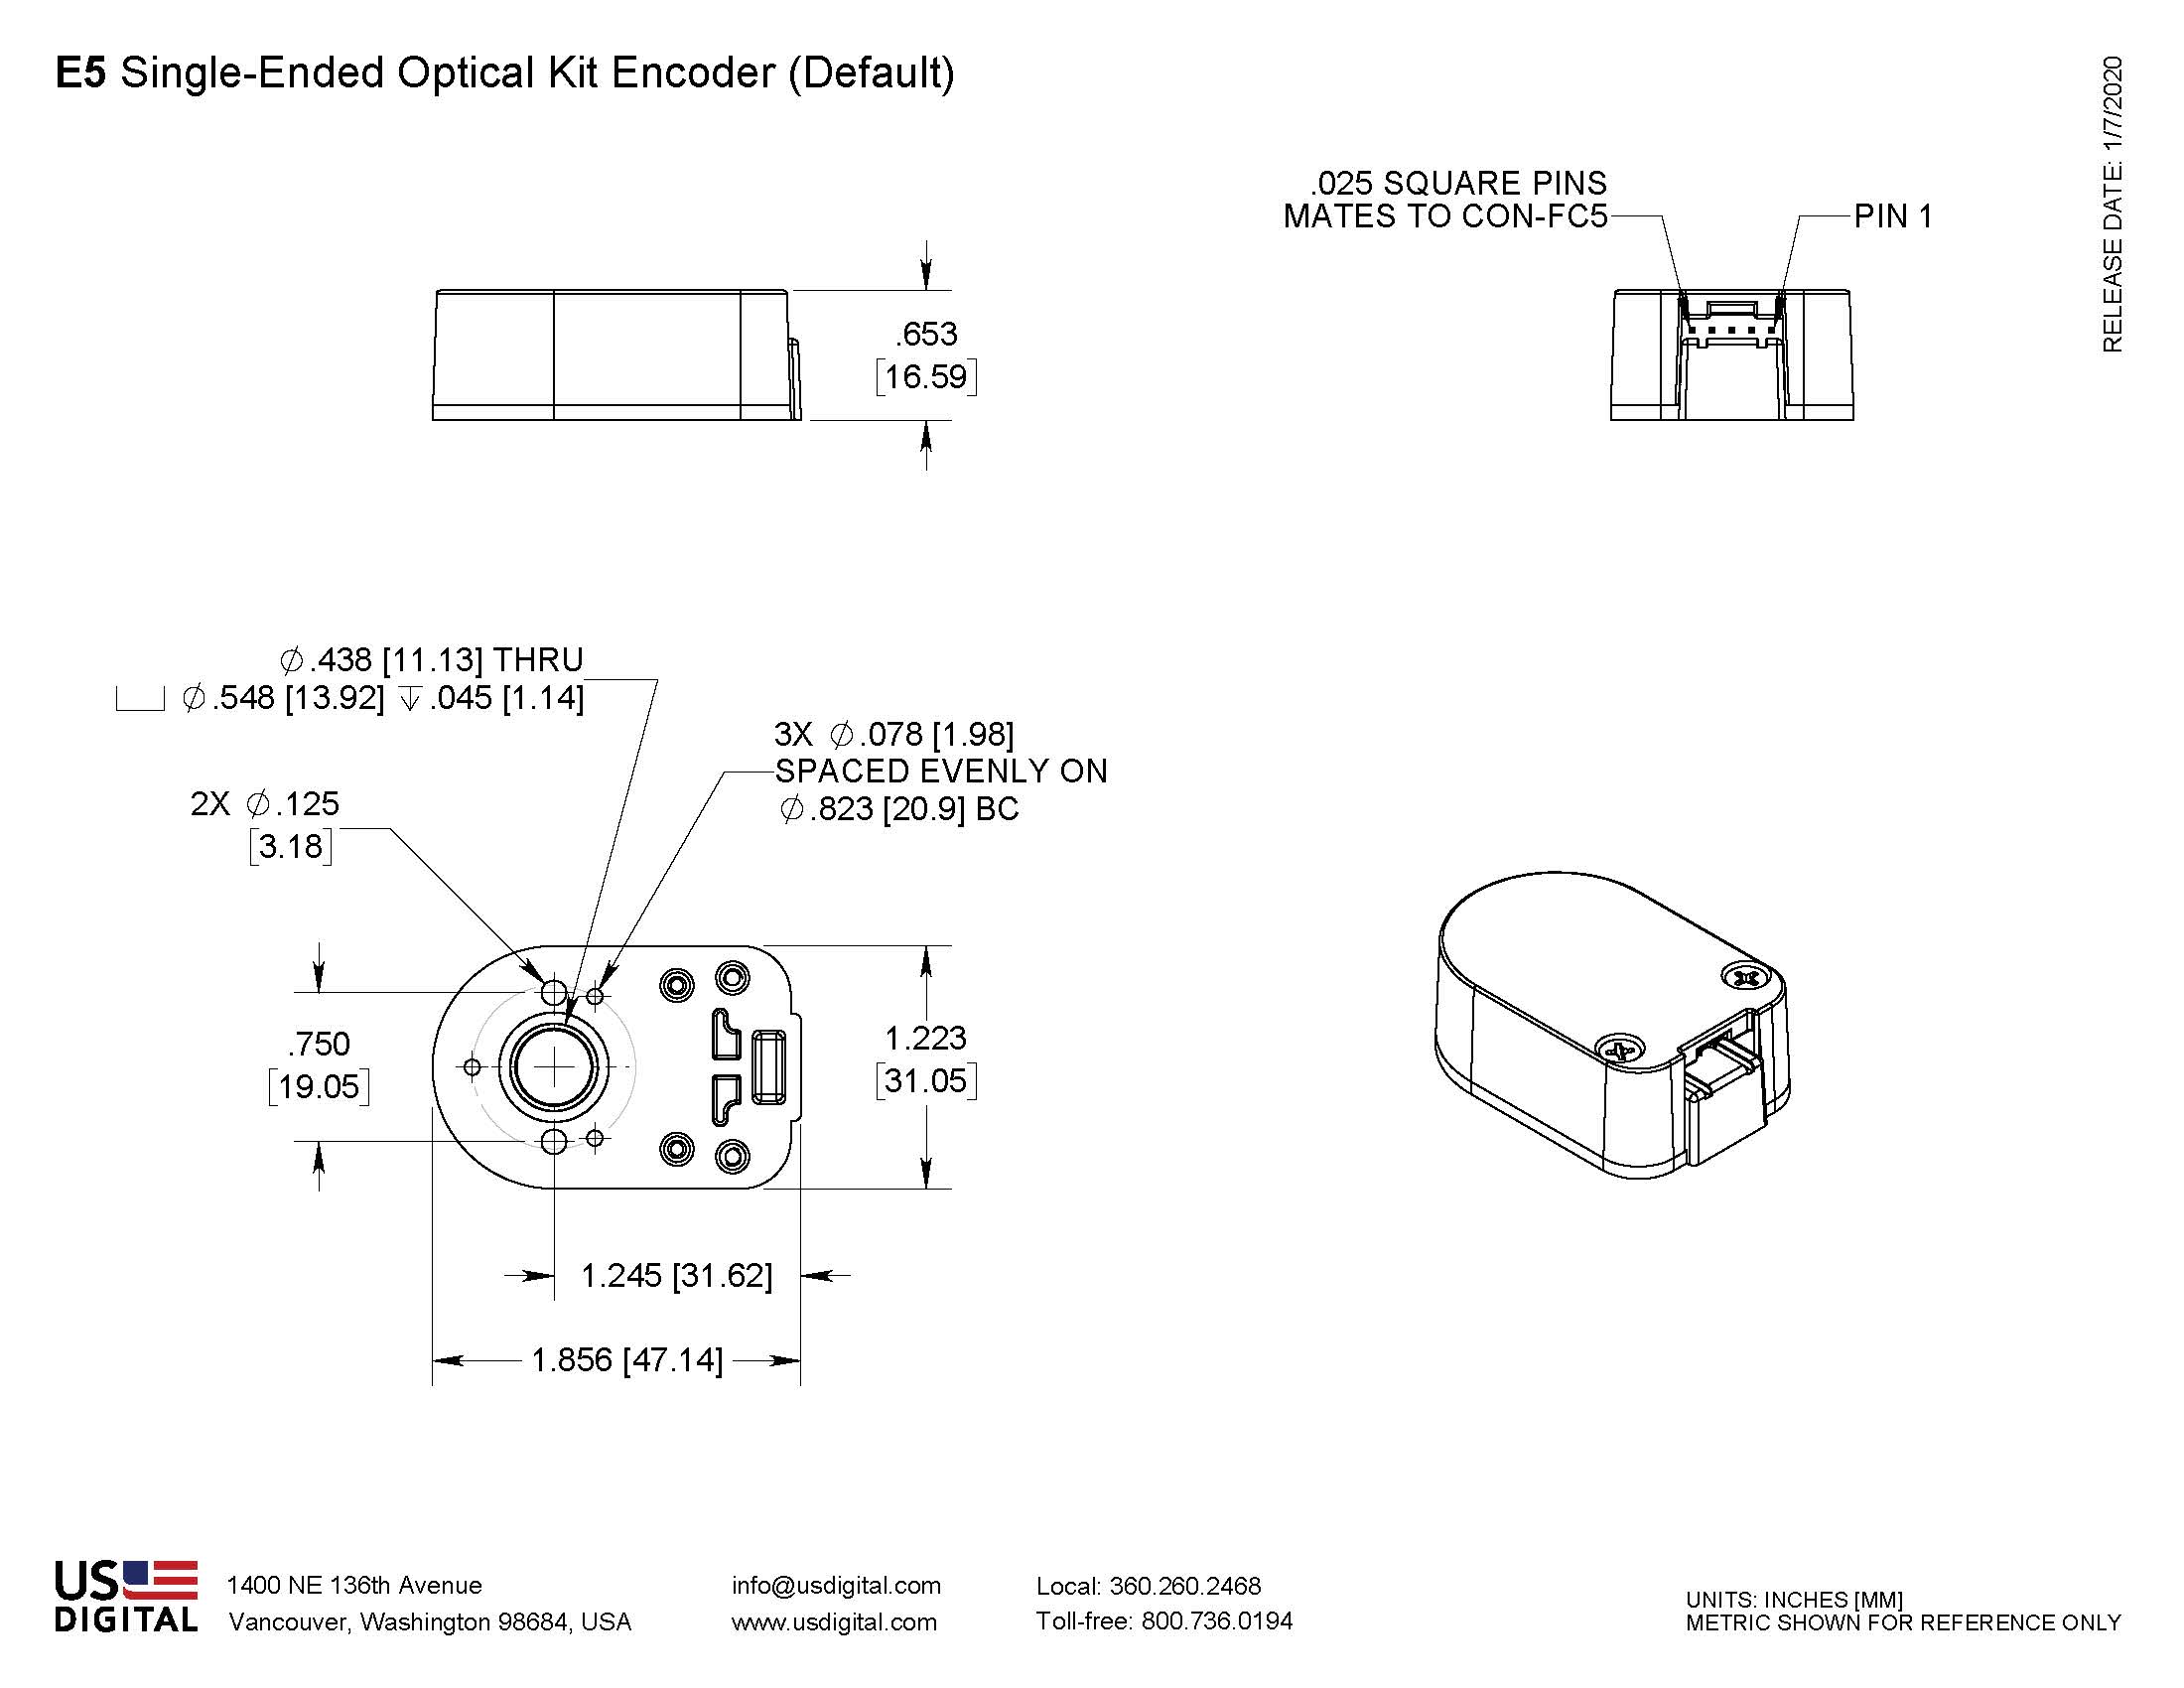 E5 Optical Kit Encoder